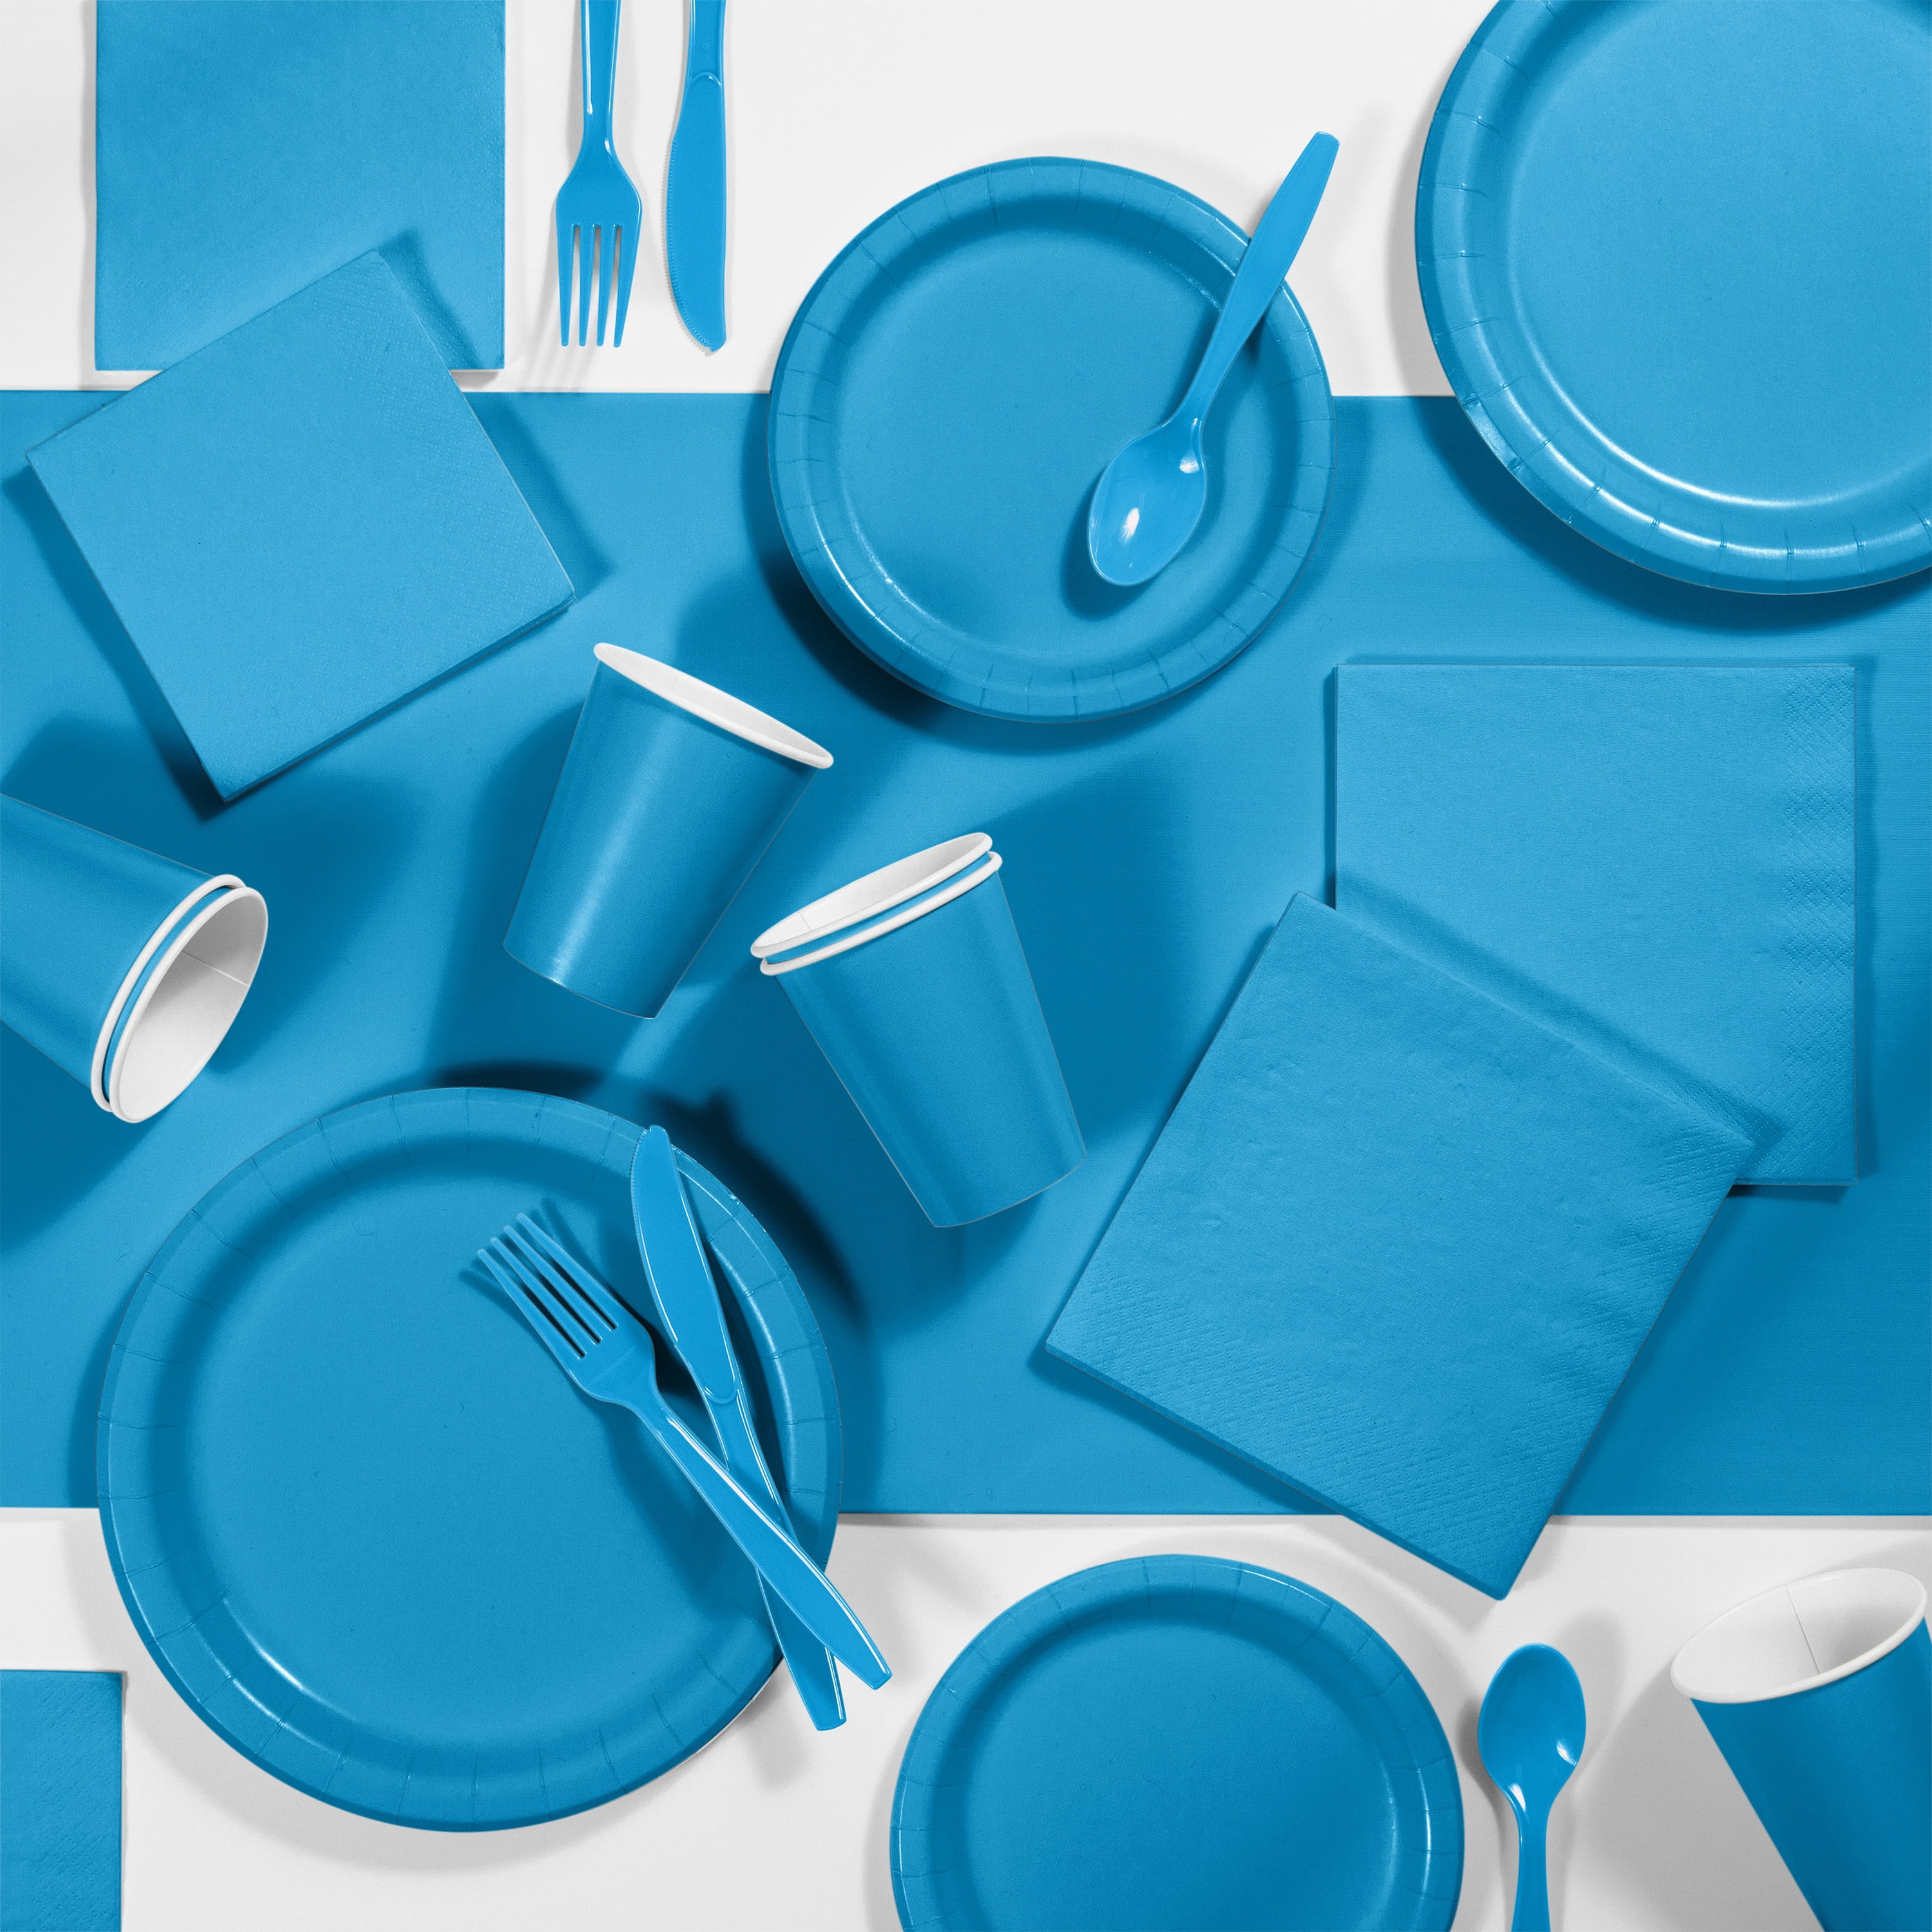 Creative Converting Plastic Bowl 20ct – Bake Supply Plus